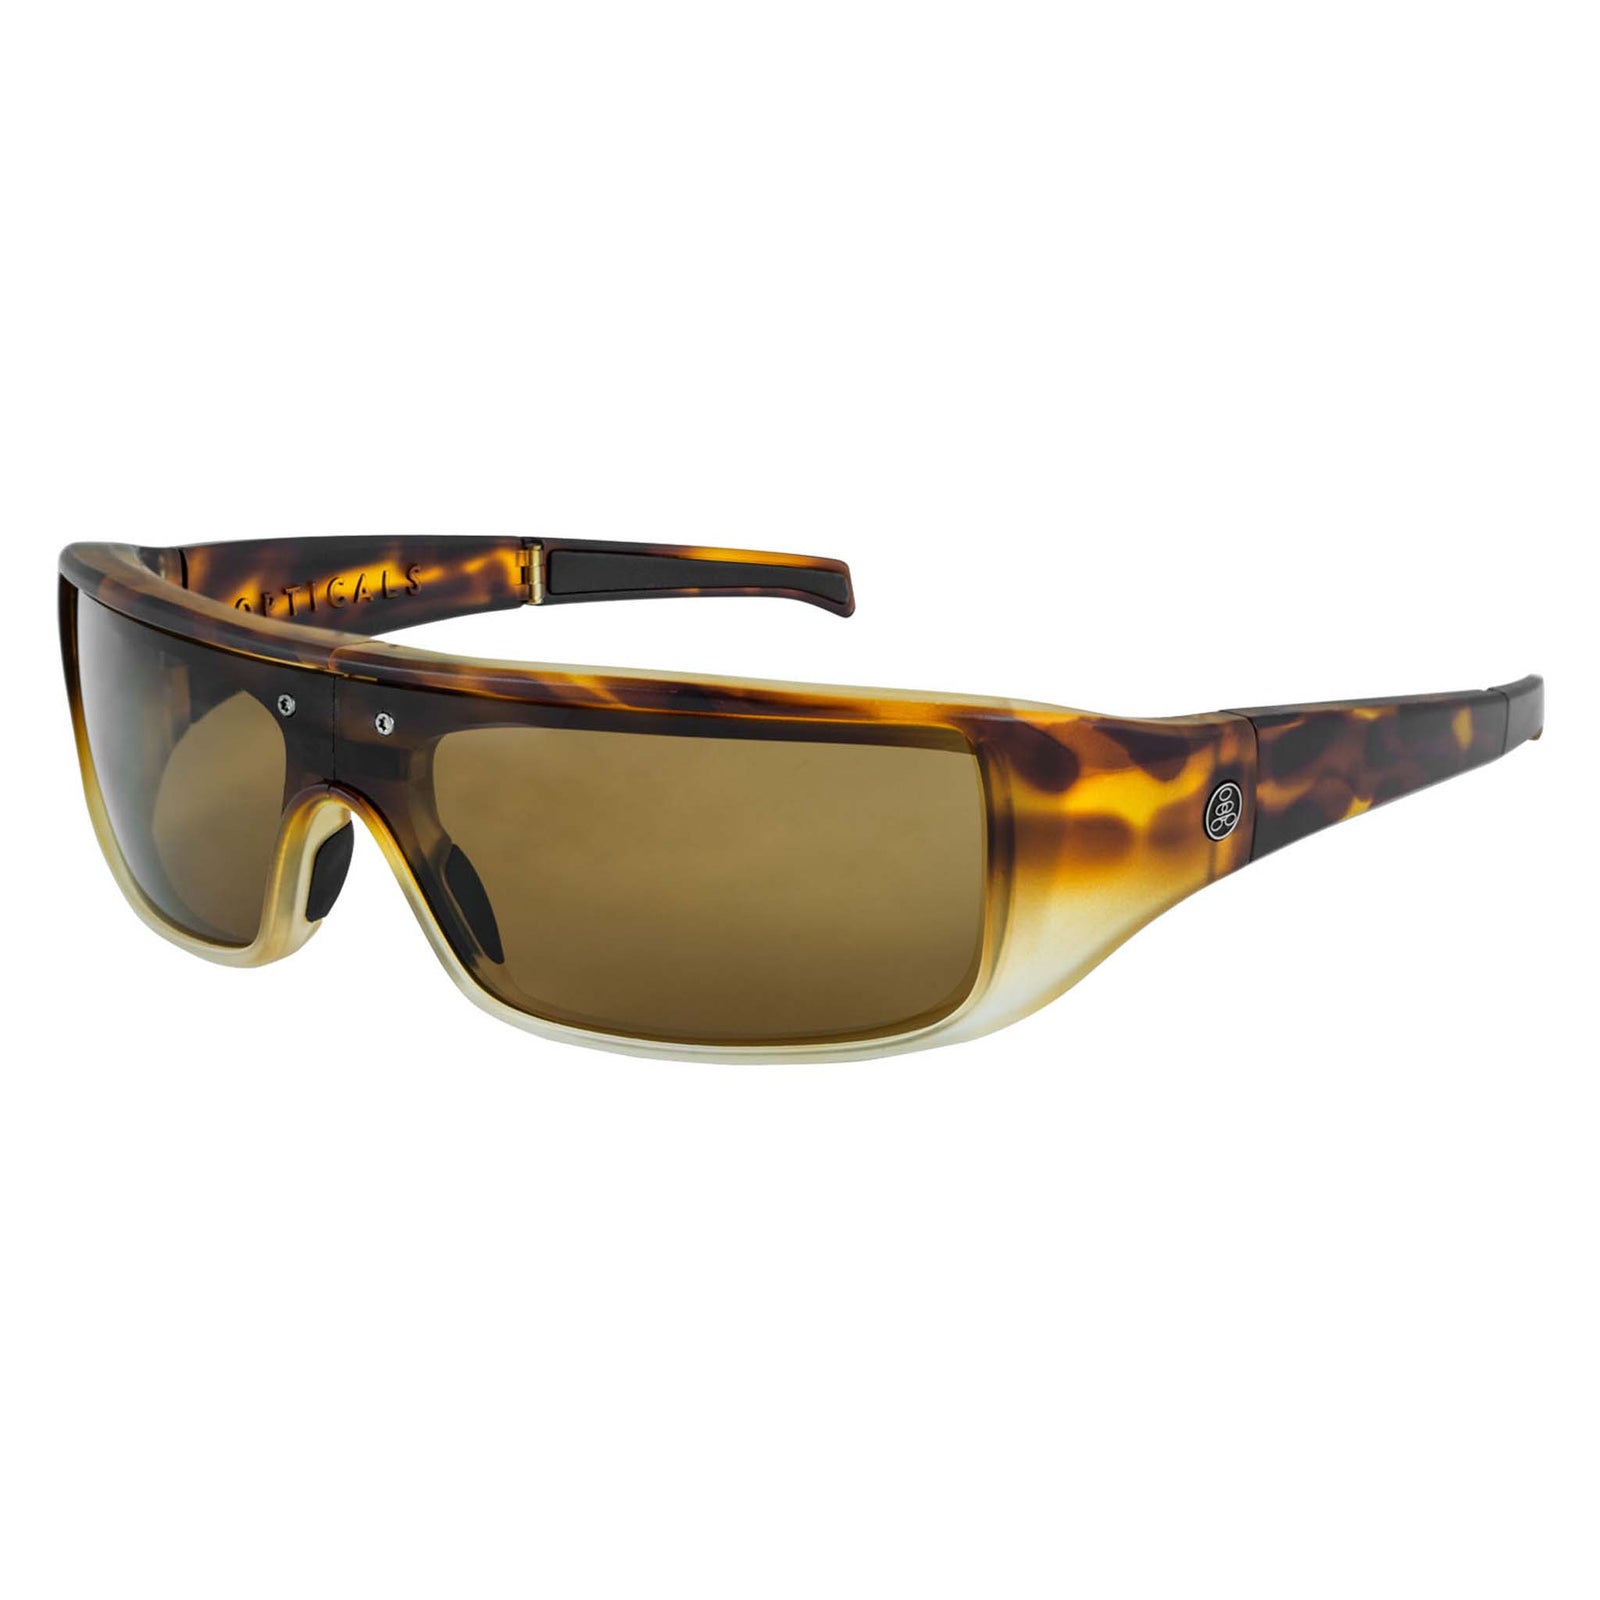 Popticals, Premium Compact Sunglasses, PopGear, 010050-BUNS, Standard Sunglasses, Matte Tortoise Crystal Frames, Brown Lenses, Glam View